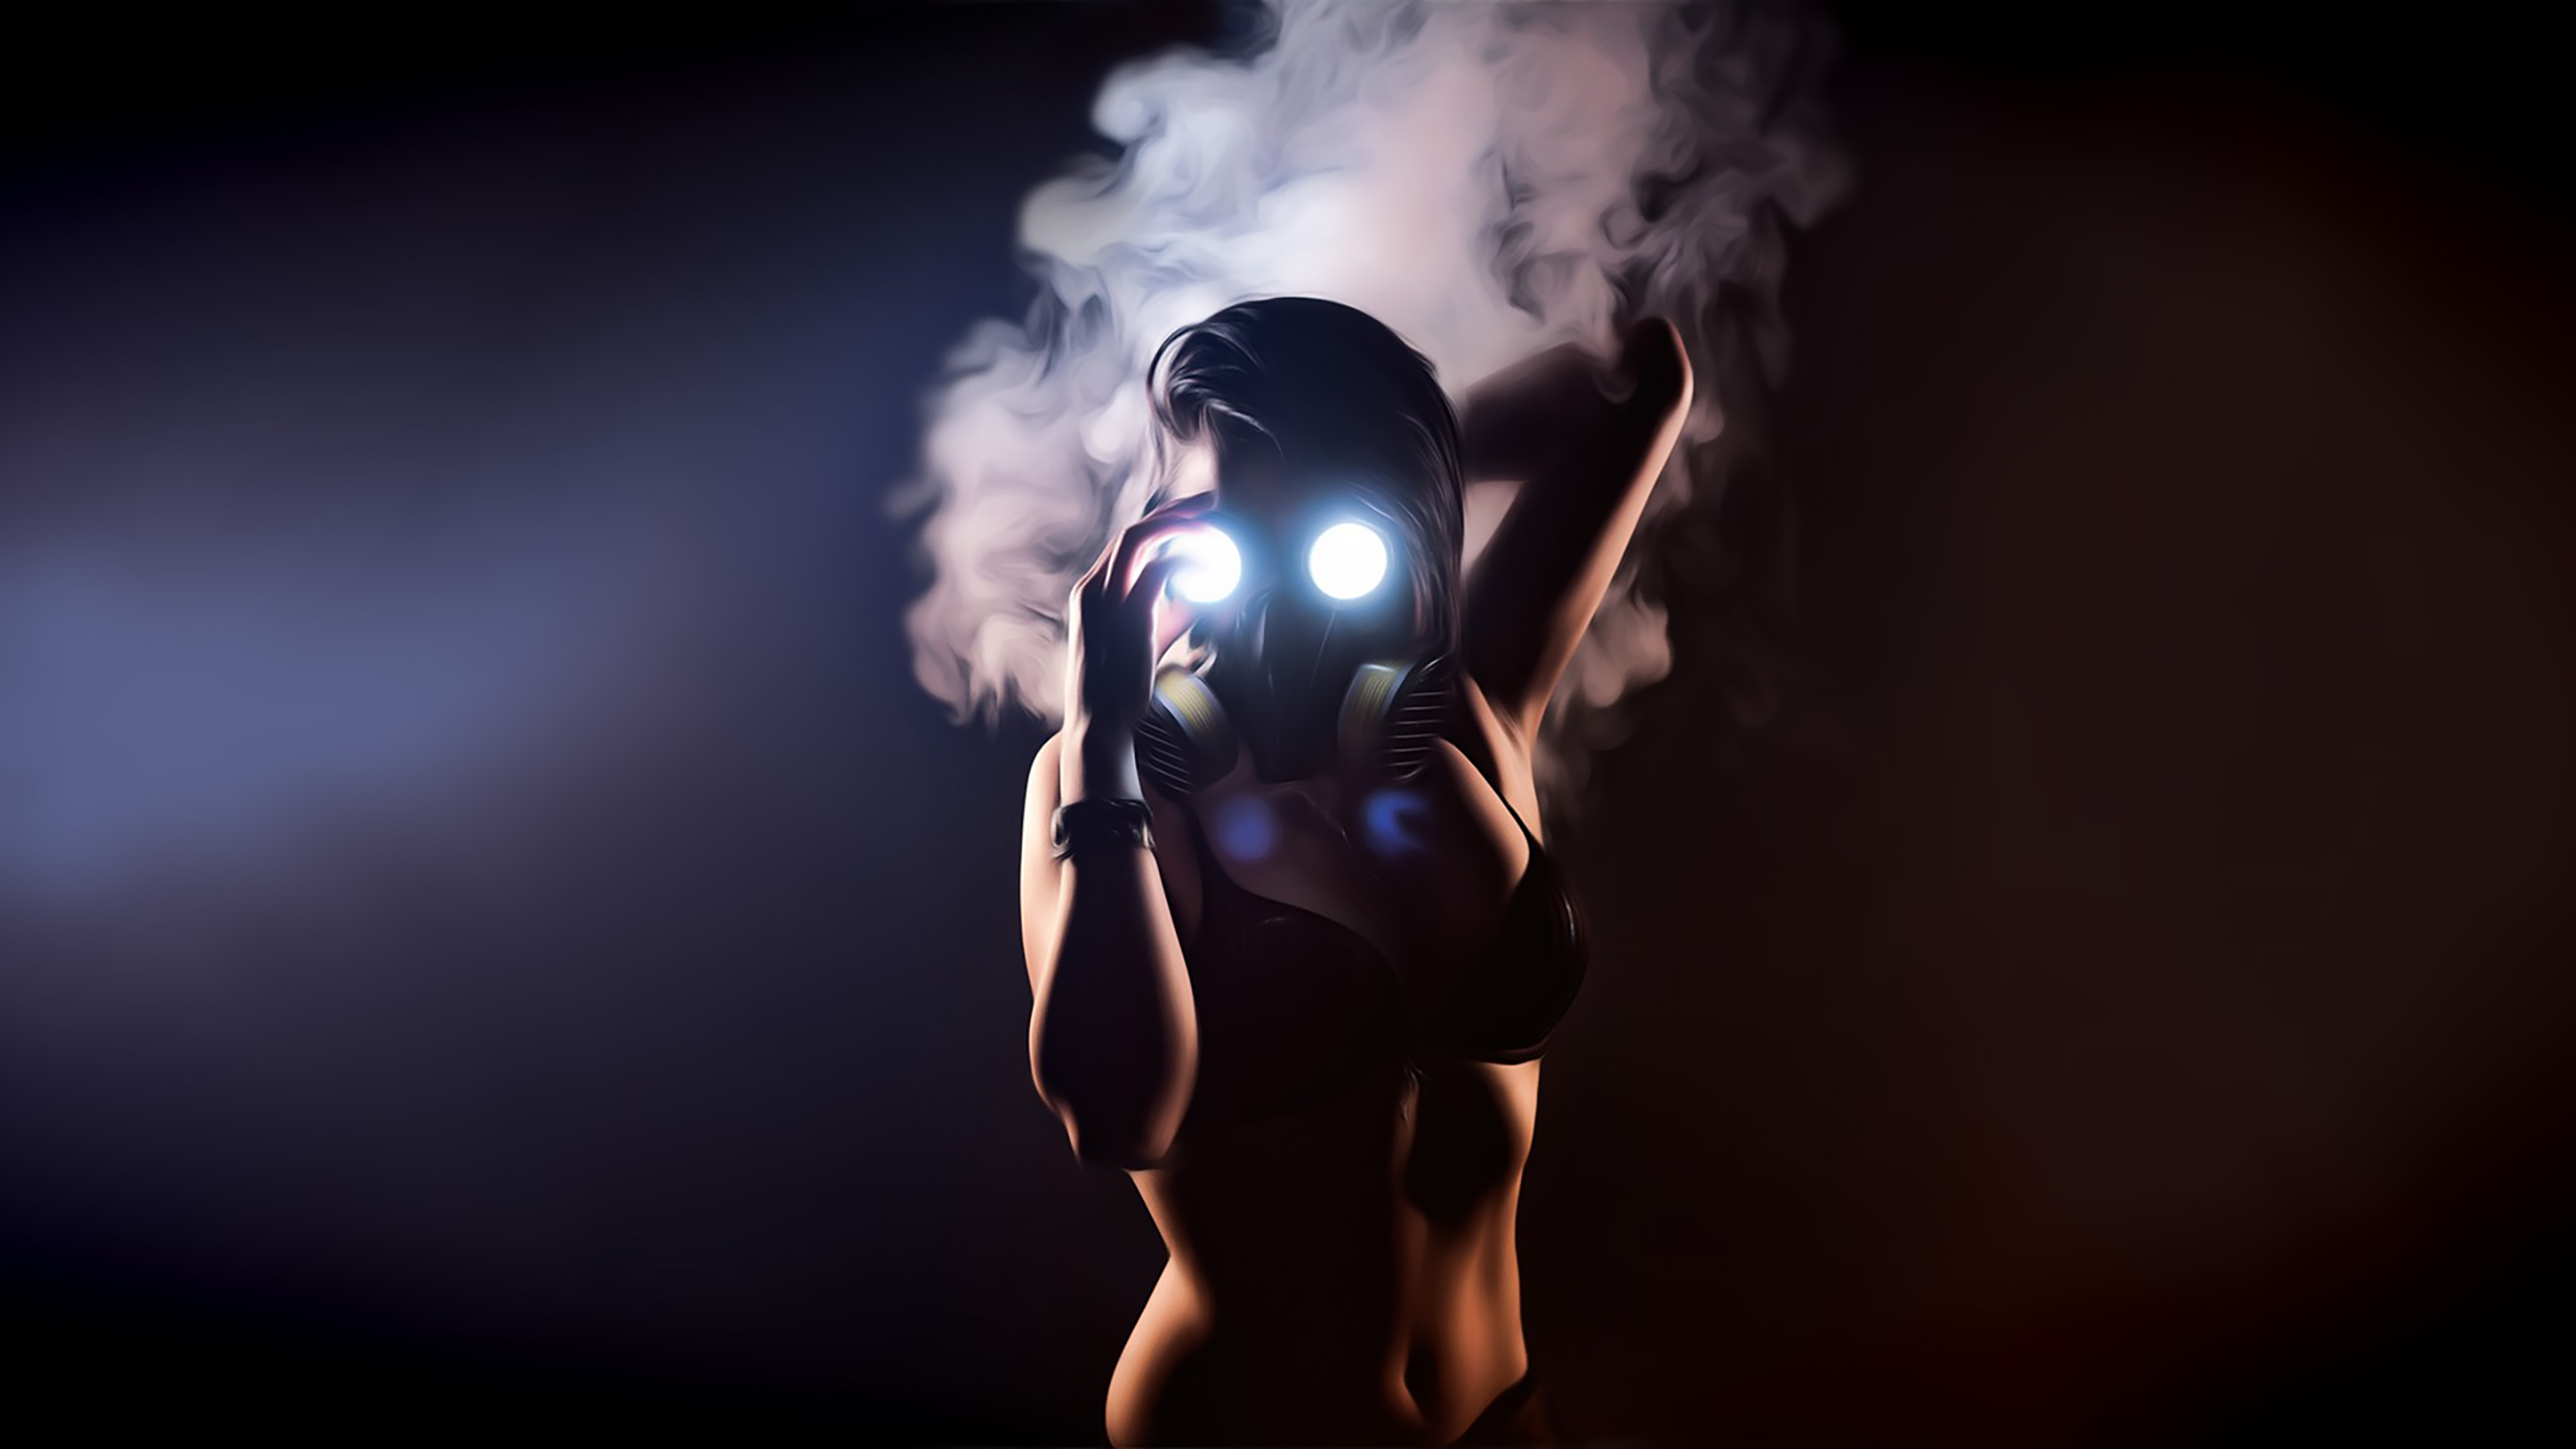 General 3840x2160 gas masks cannabis simple background women low light one arm up armpits smoke skinny black bras bra